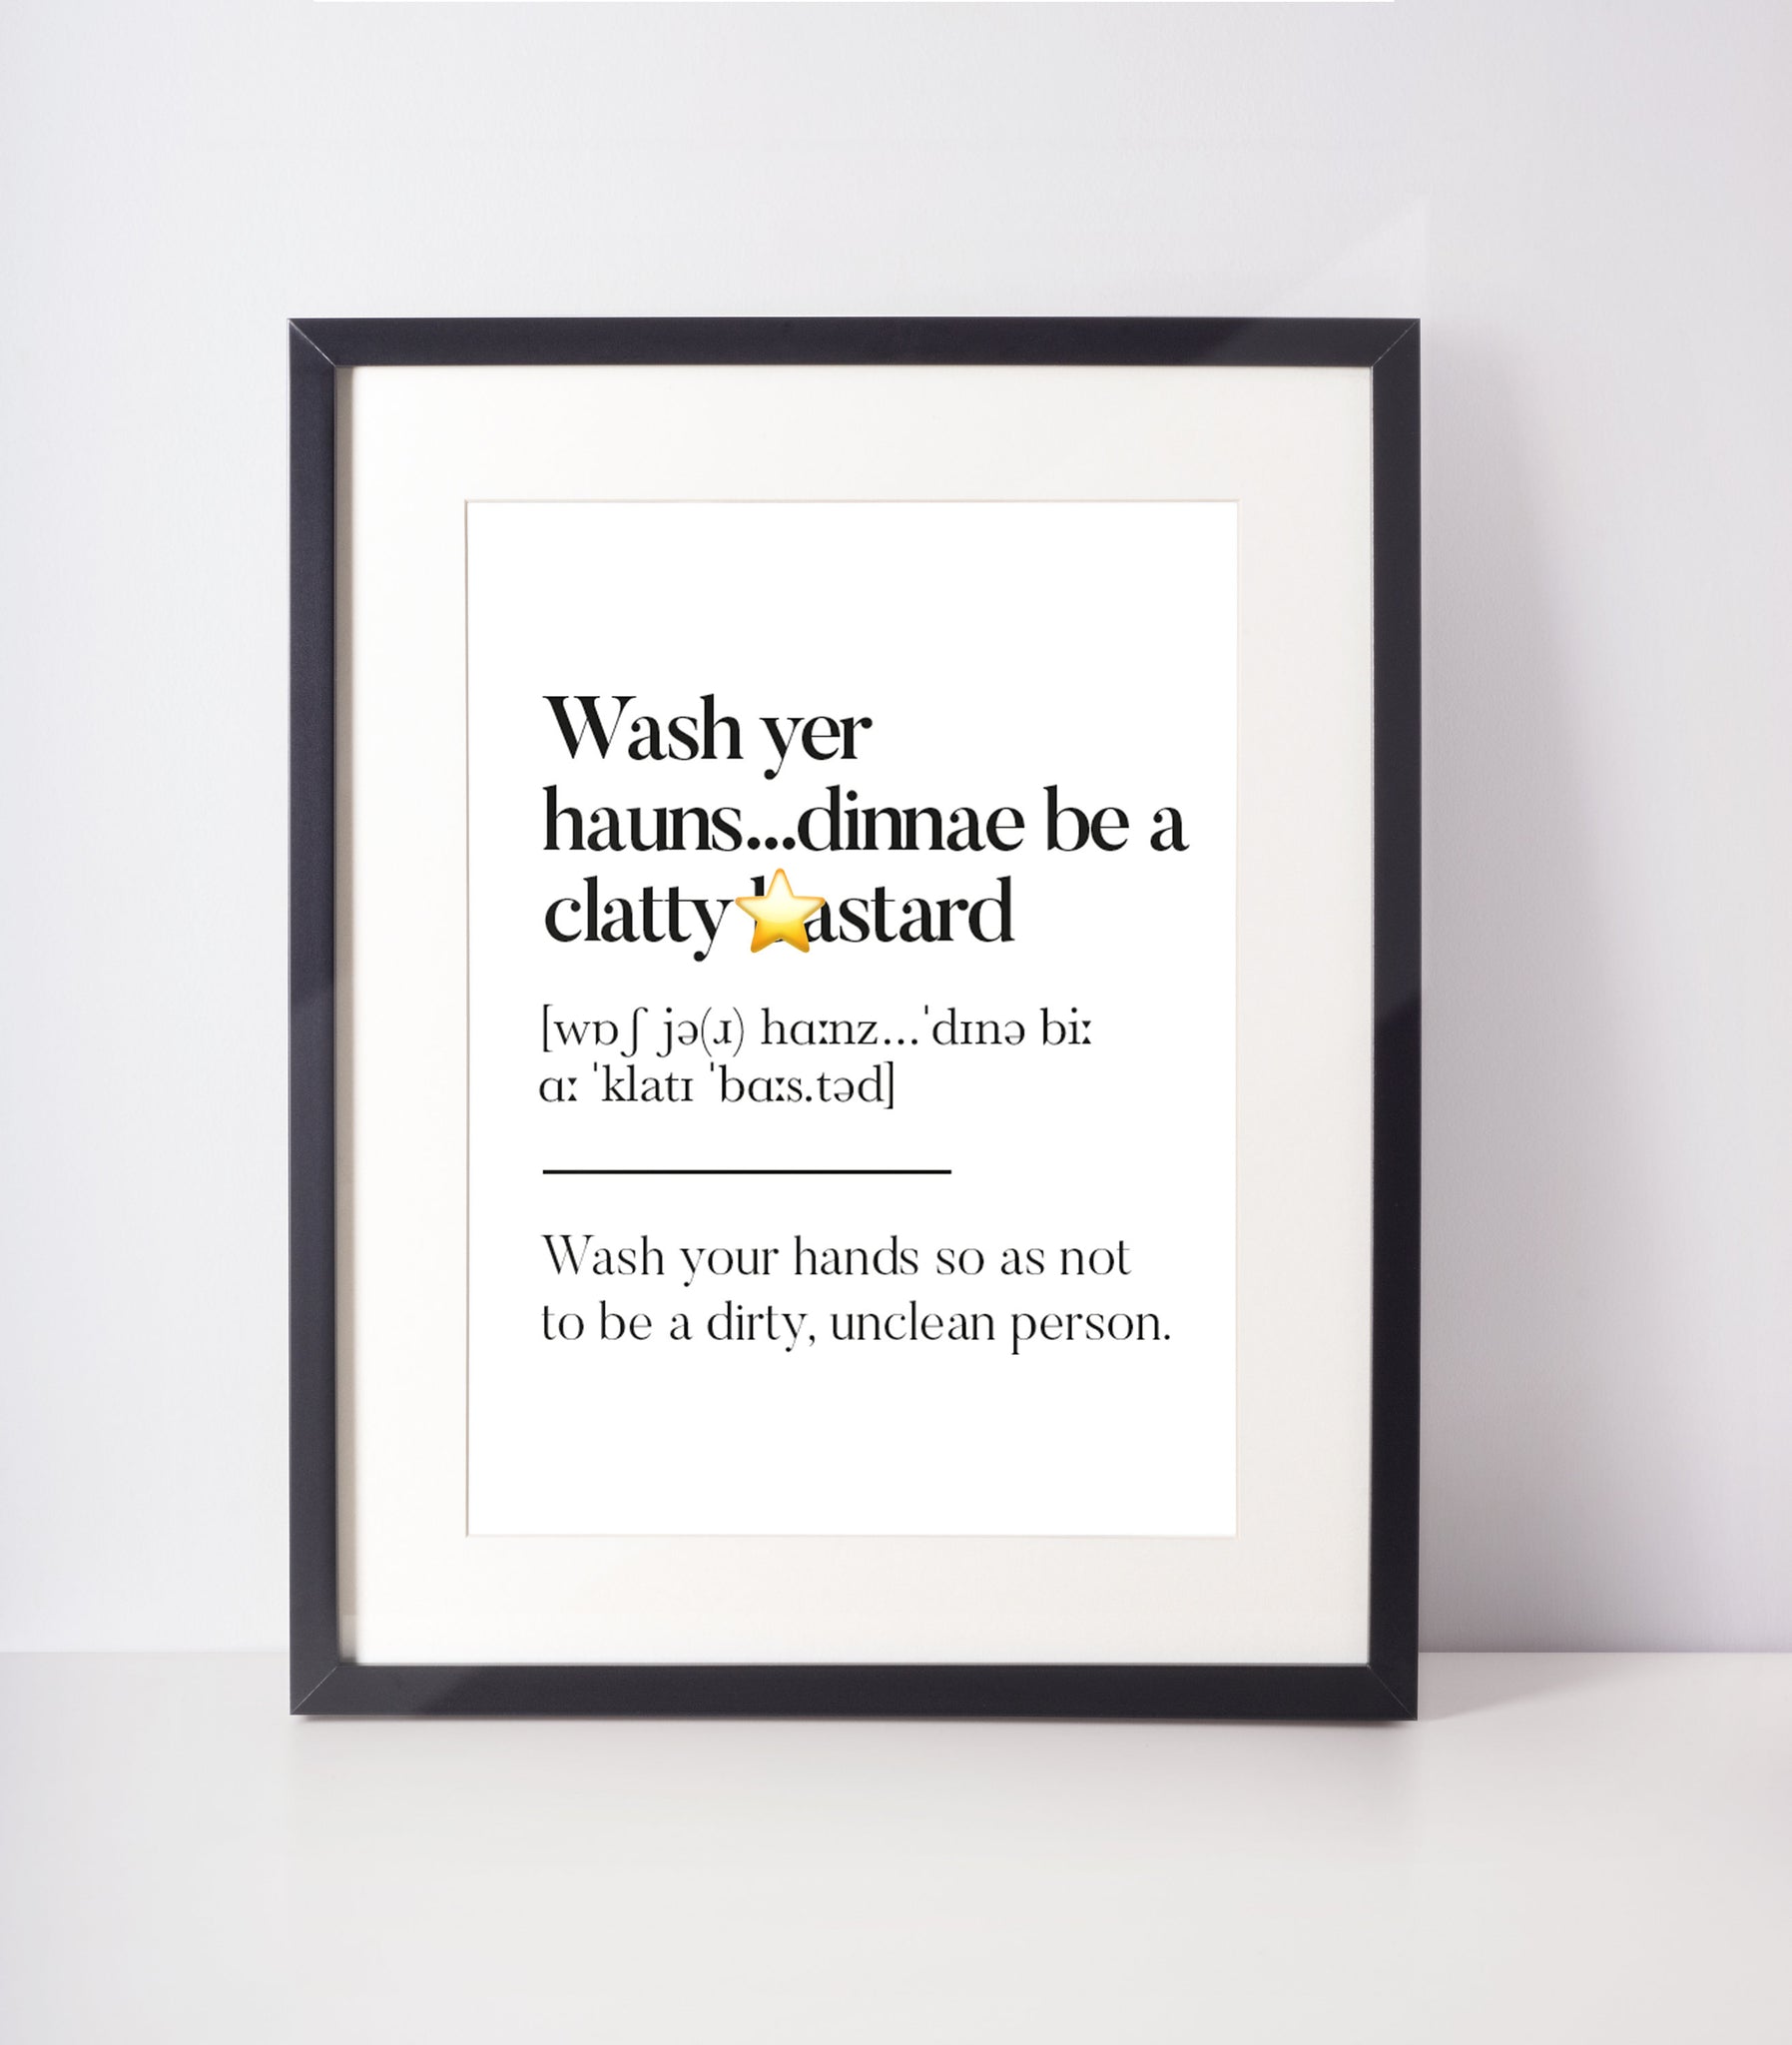 Wash your hauns Scottish Slang Definition Unframed Print